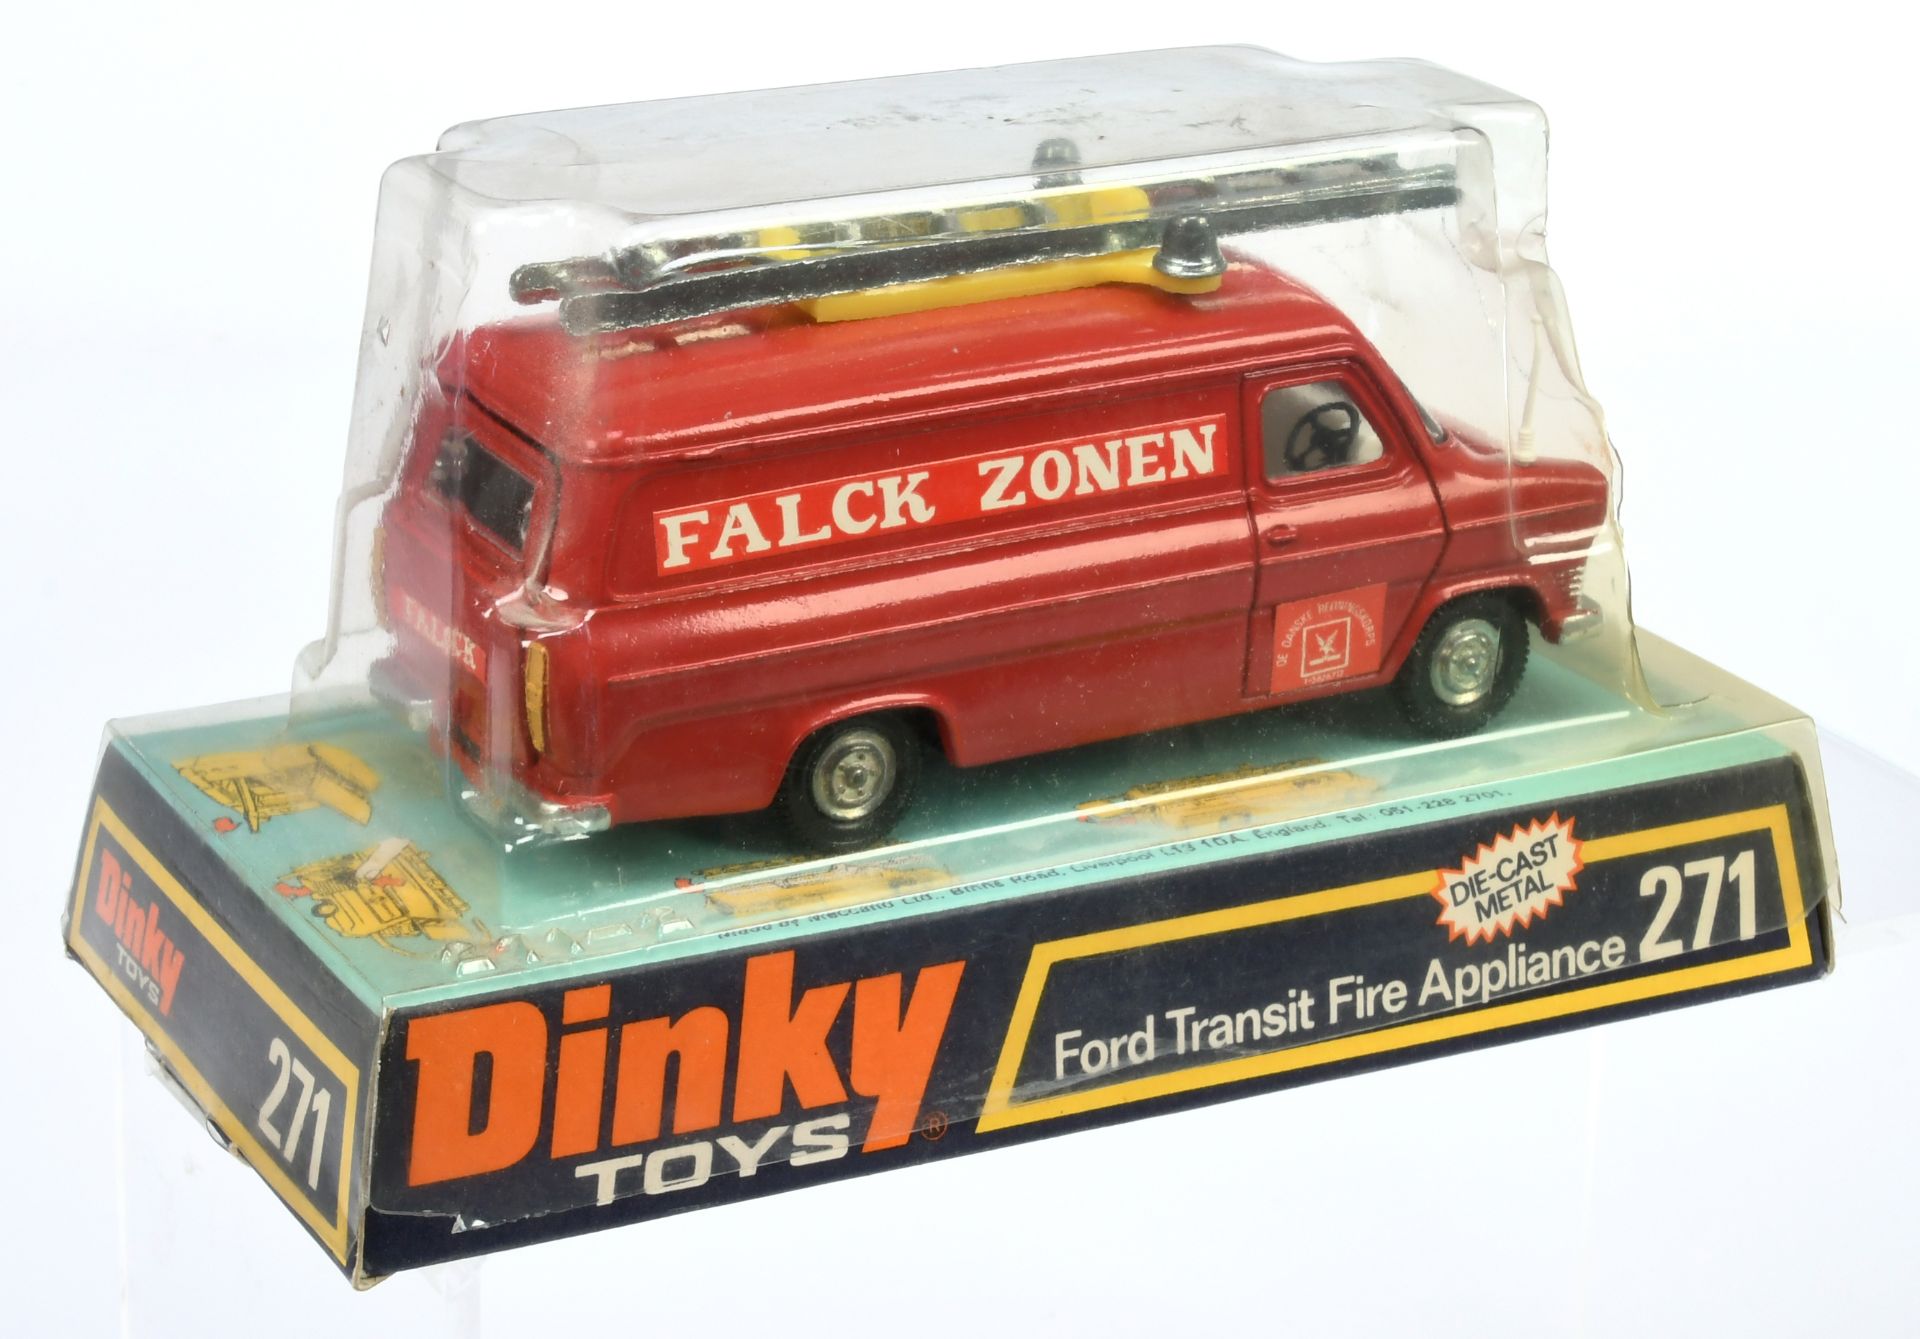 Dinky Toys 271 "Falck Zonen" Ford Transit Van - Red body, white interior and plastic aerial, blac... - Bild 2 aus 2